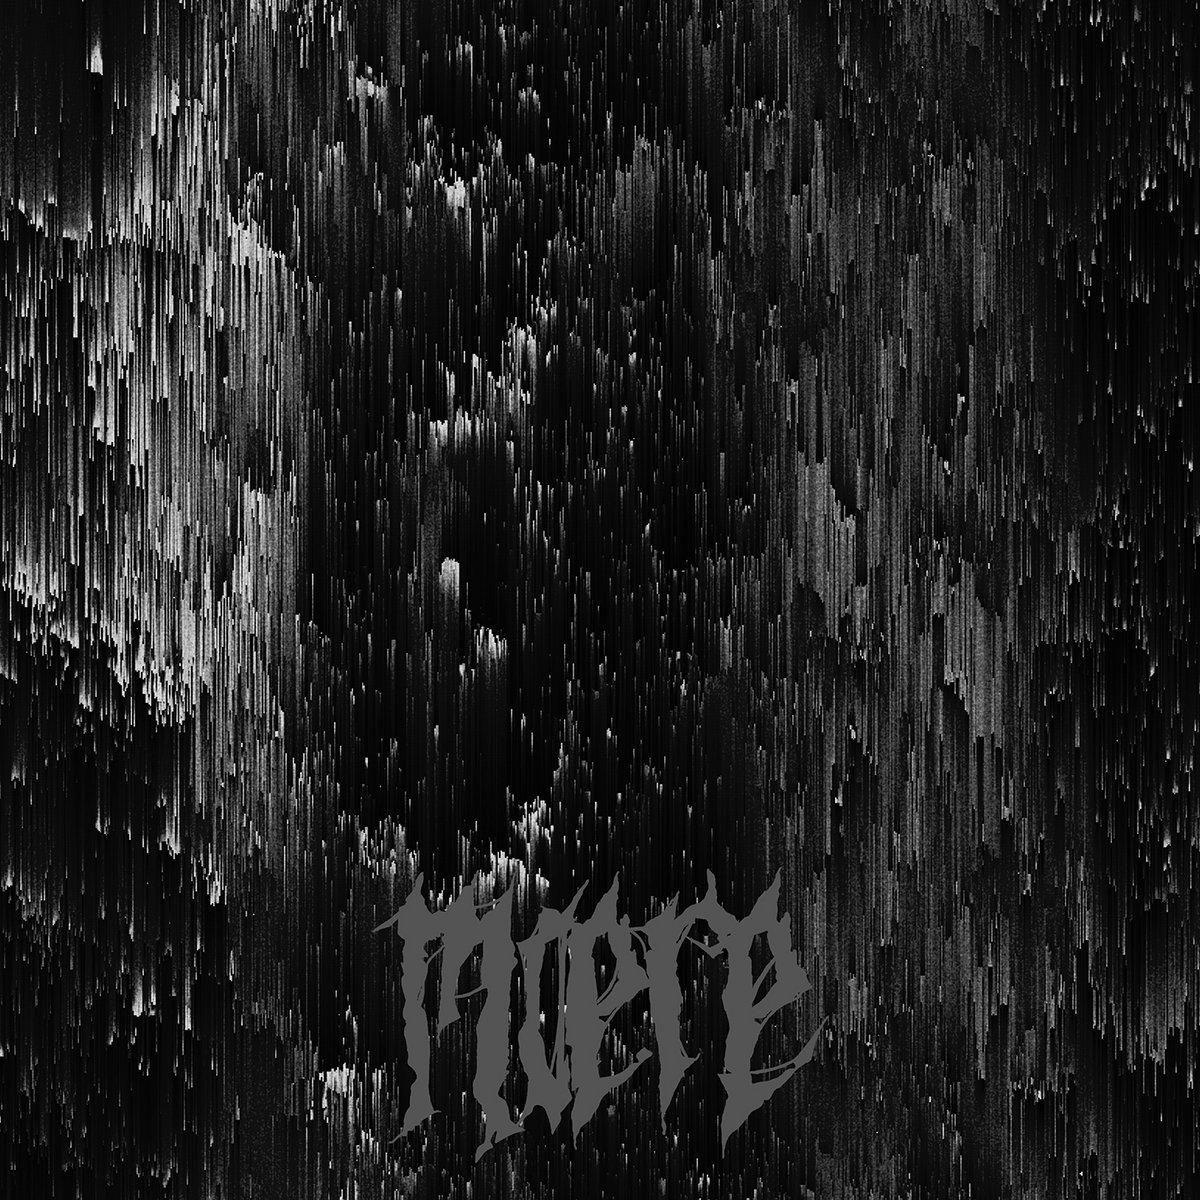 Mære

...And The Universe Keeps Silent

#blackmetal #deathmetal